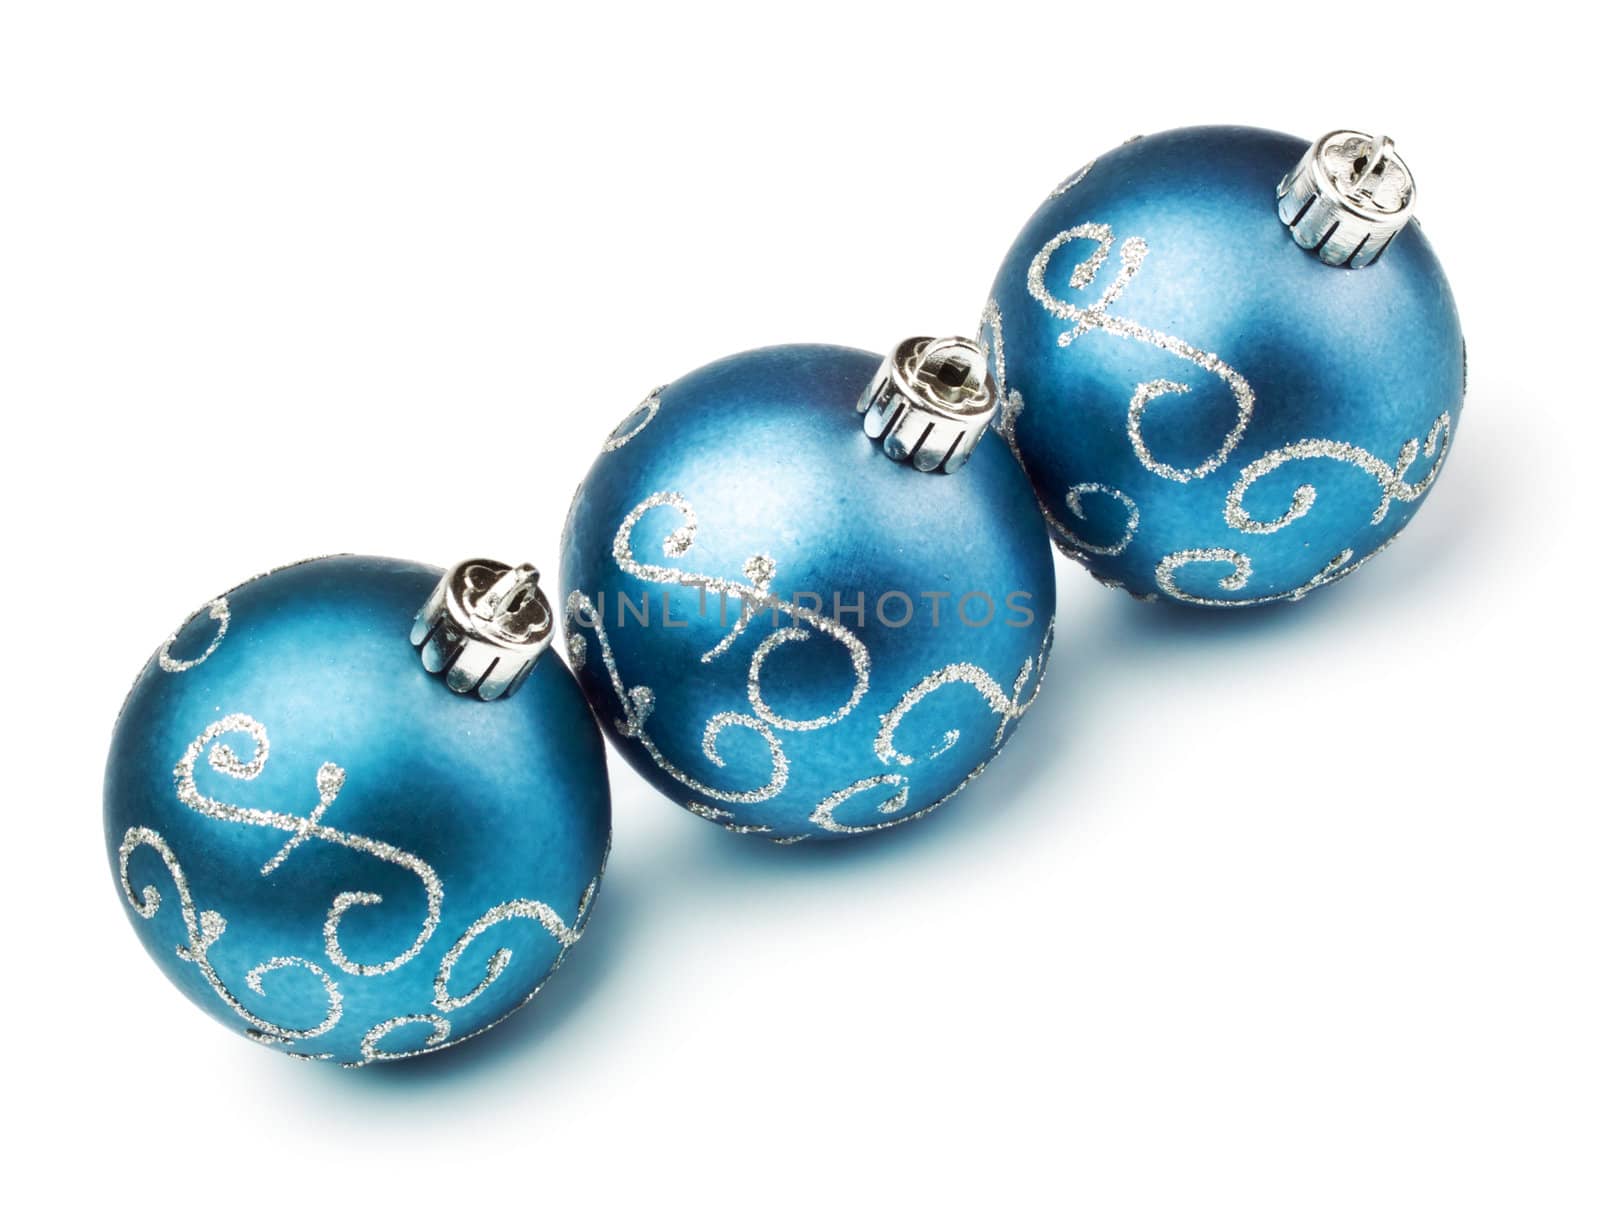 three blue decoration balls isolated on white